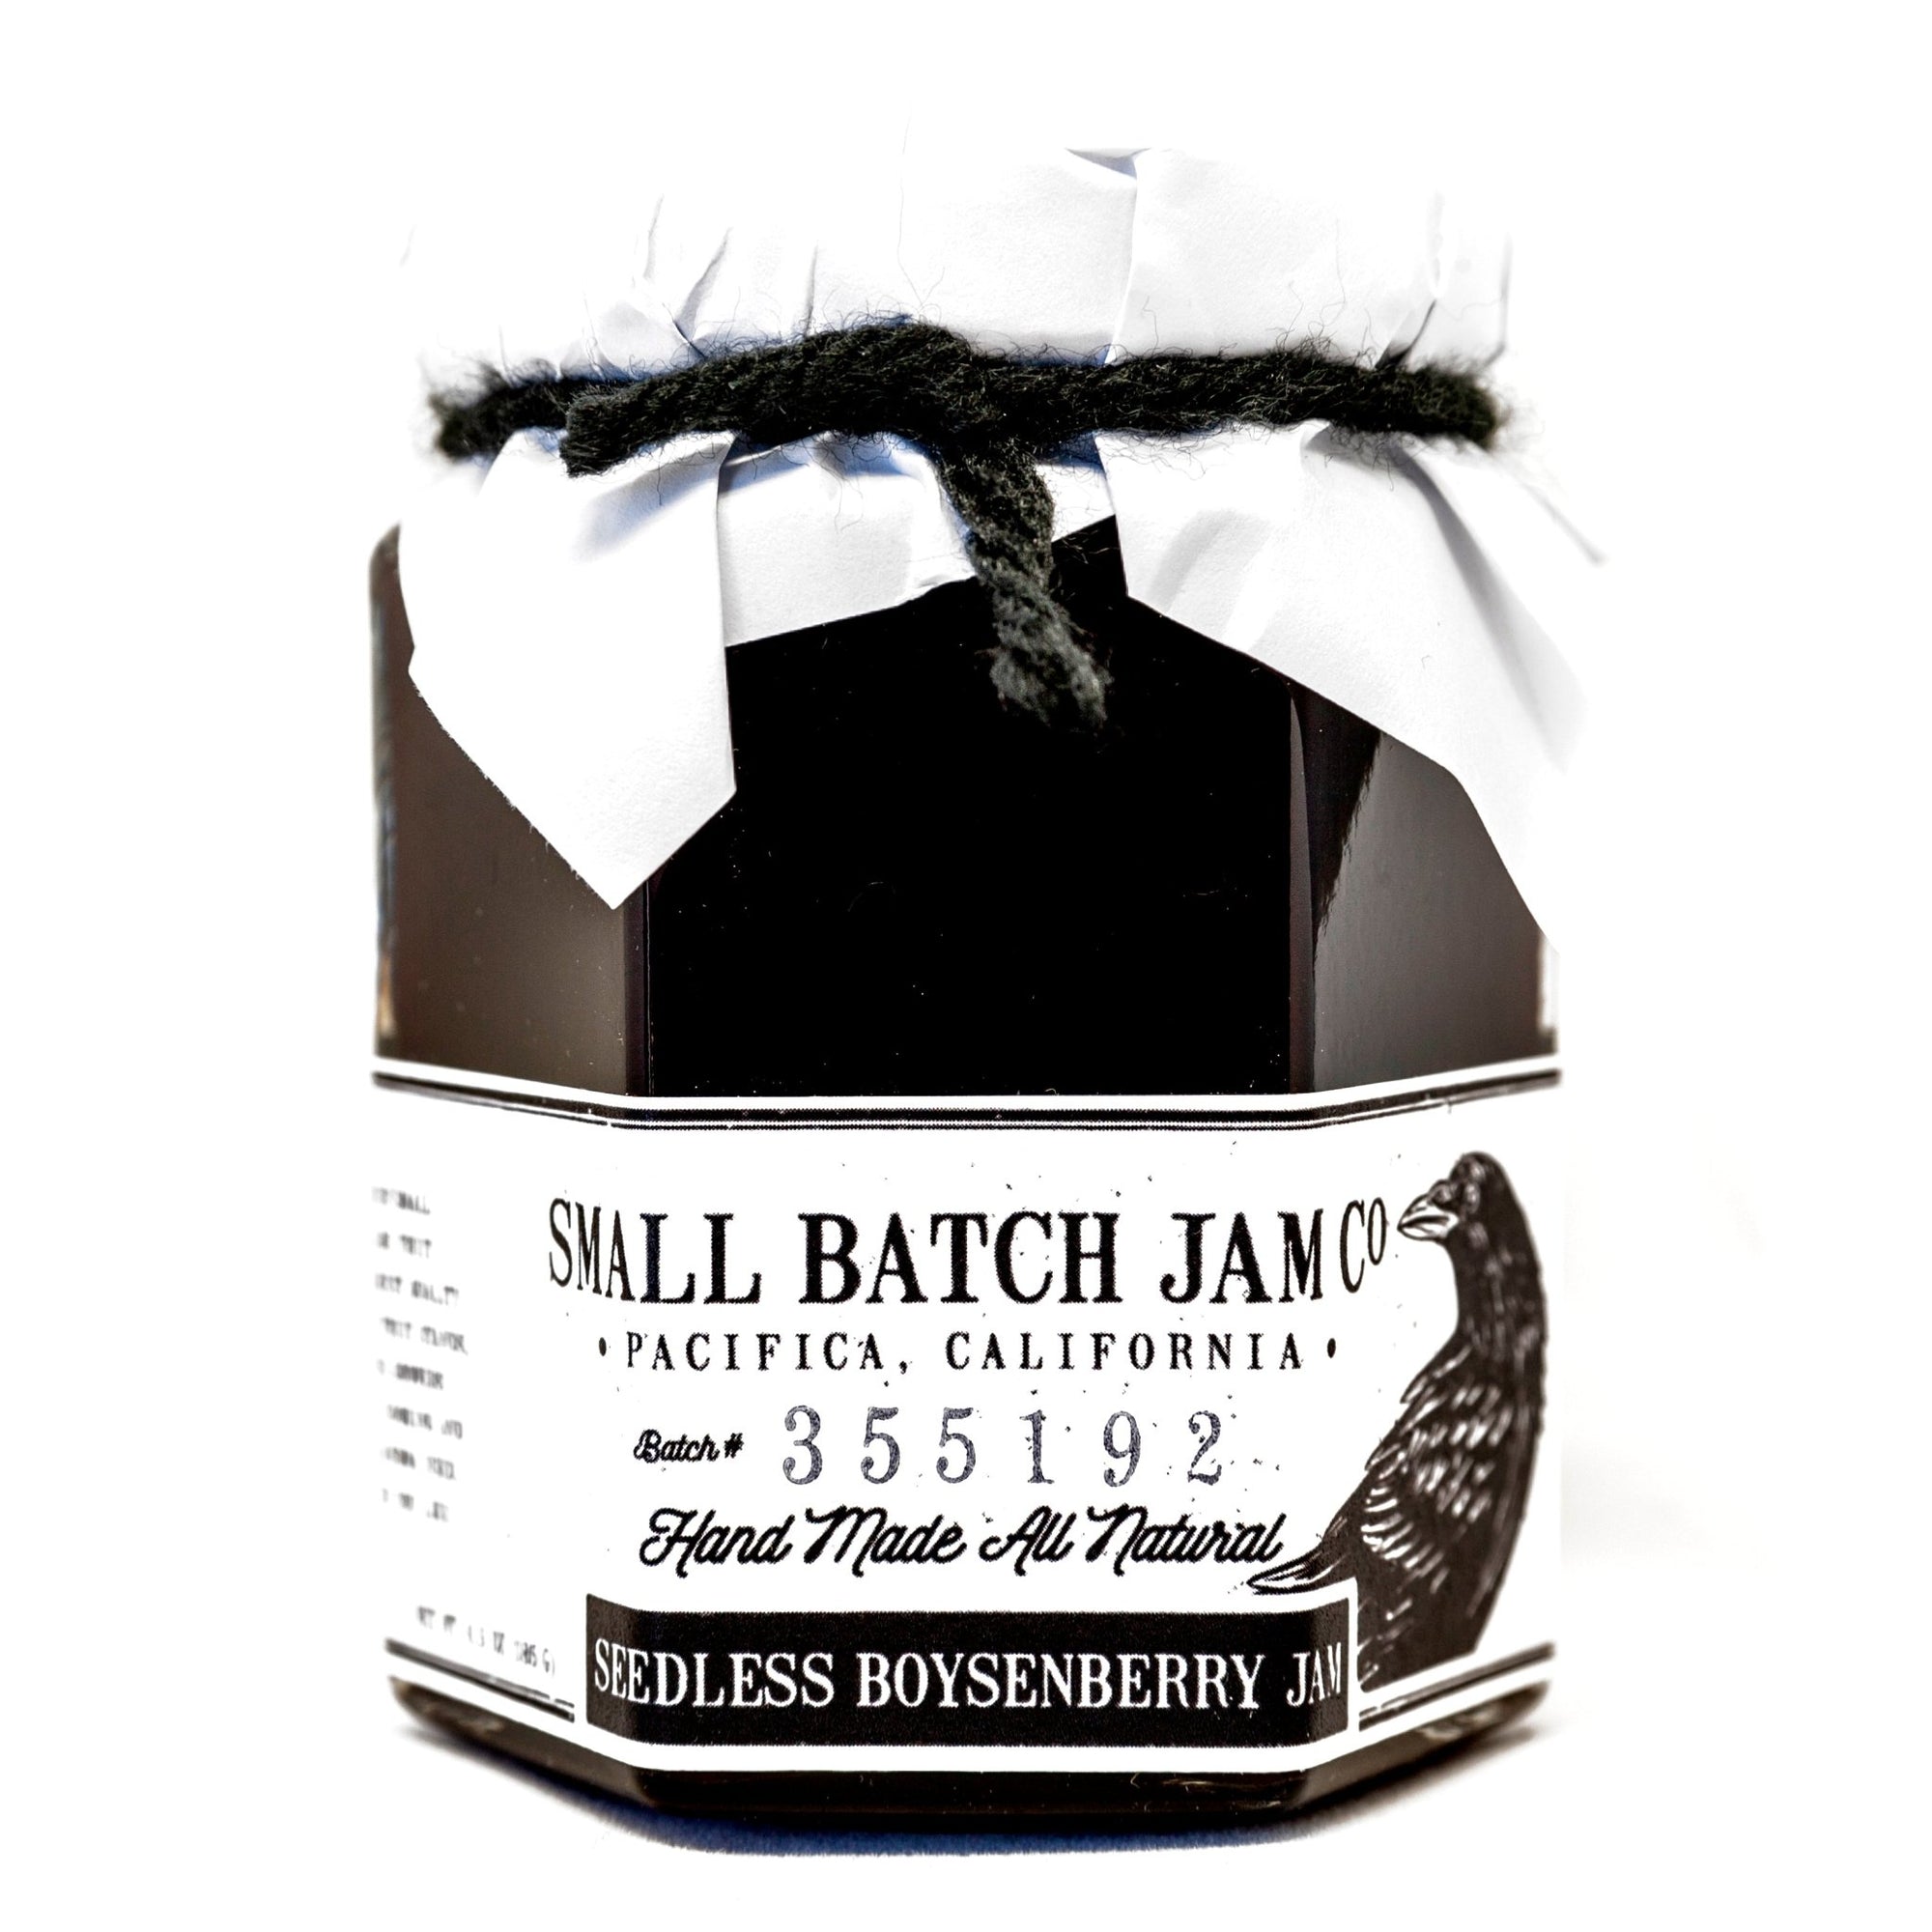 Seedless Boysenberry Jam - Small Batch Jam Co